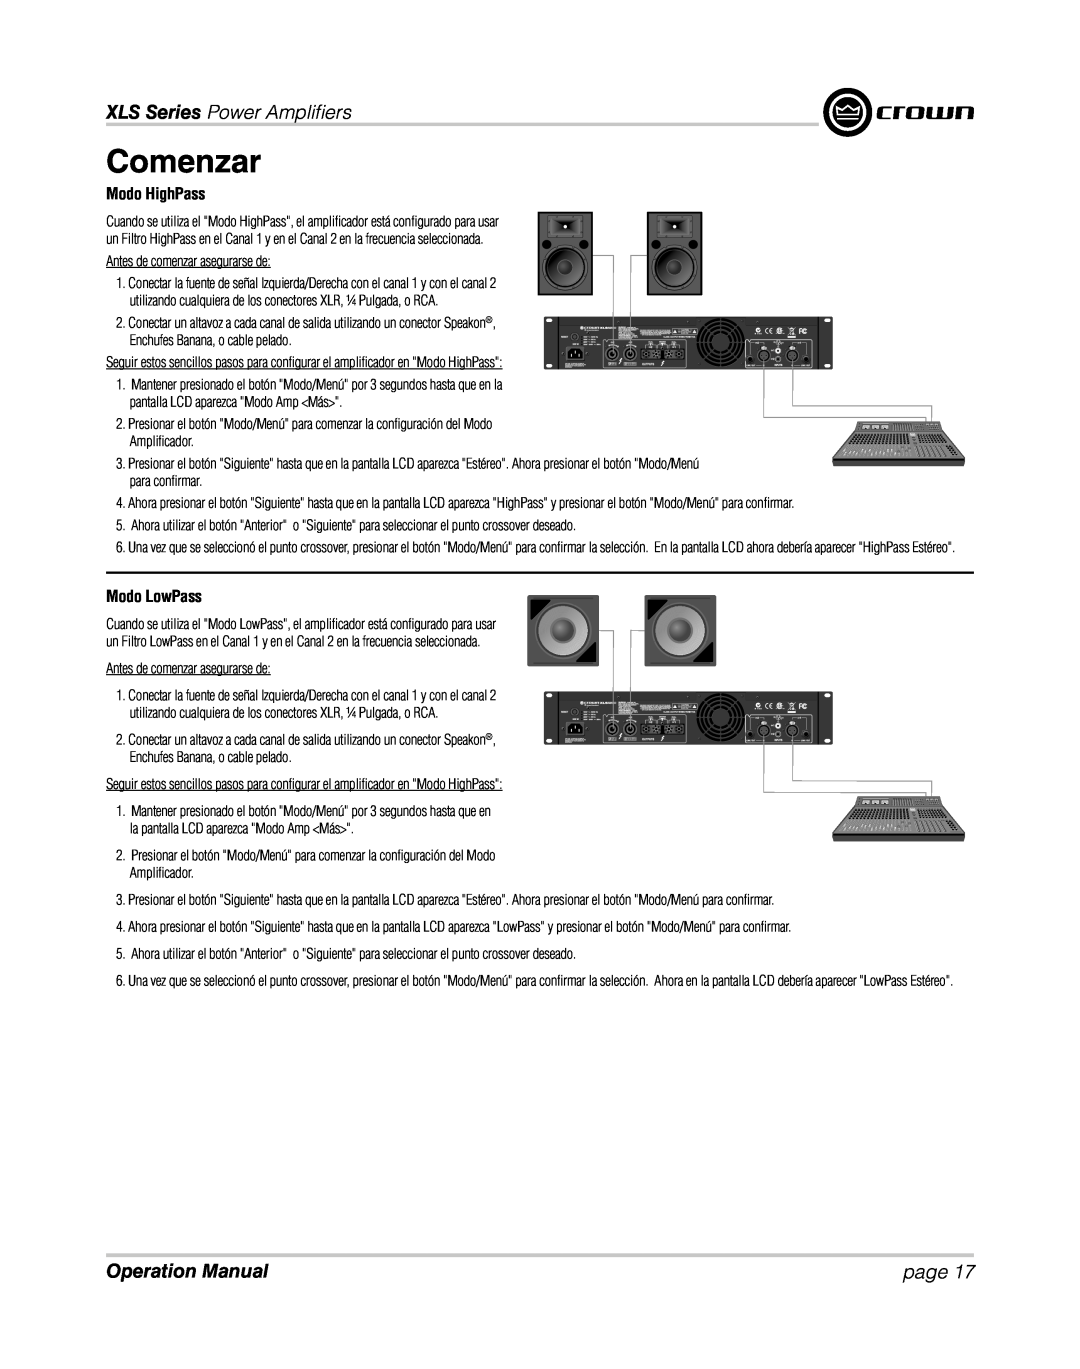 Crown XLS 1000 operation manual Modo HighPass, Modo LowPass, Comenzar, XLS Series Power Ampliﬁ ers, page 